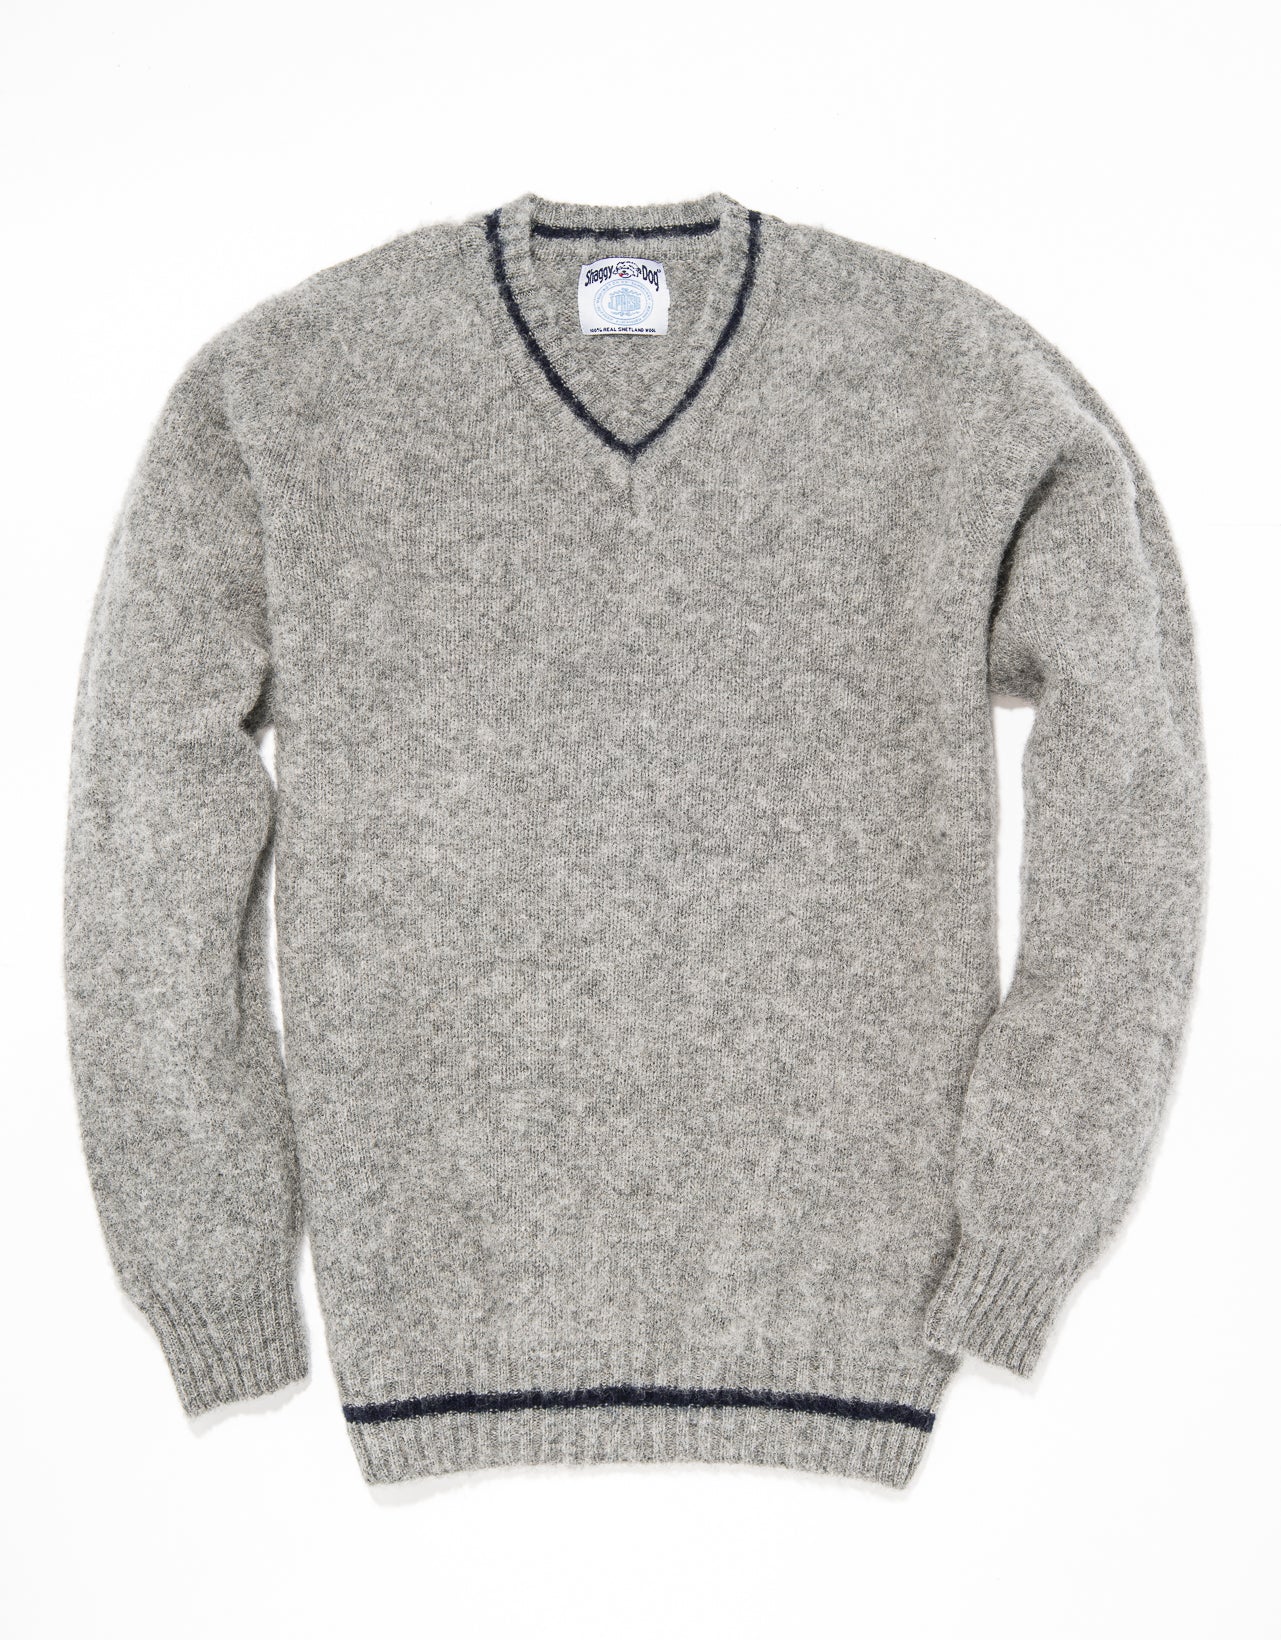 Shaggy Dog V-Neck Sweater Grey- Trim Fit | Men's Sweaters - J. Press ...